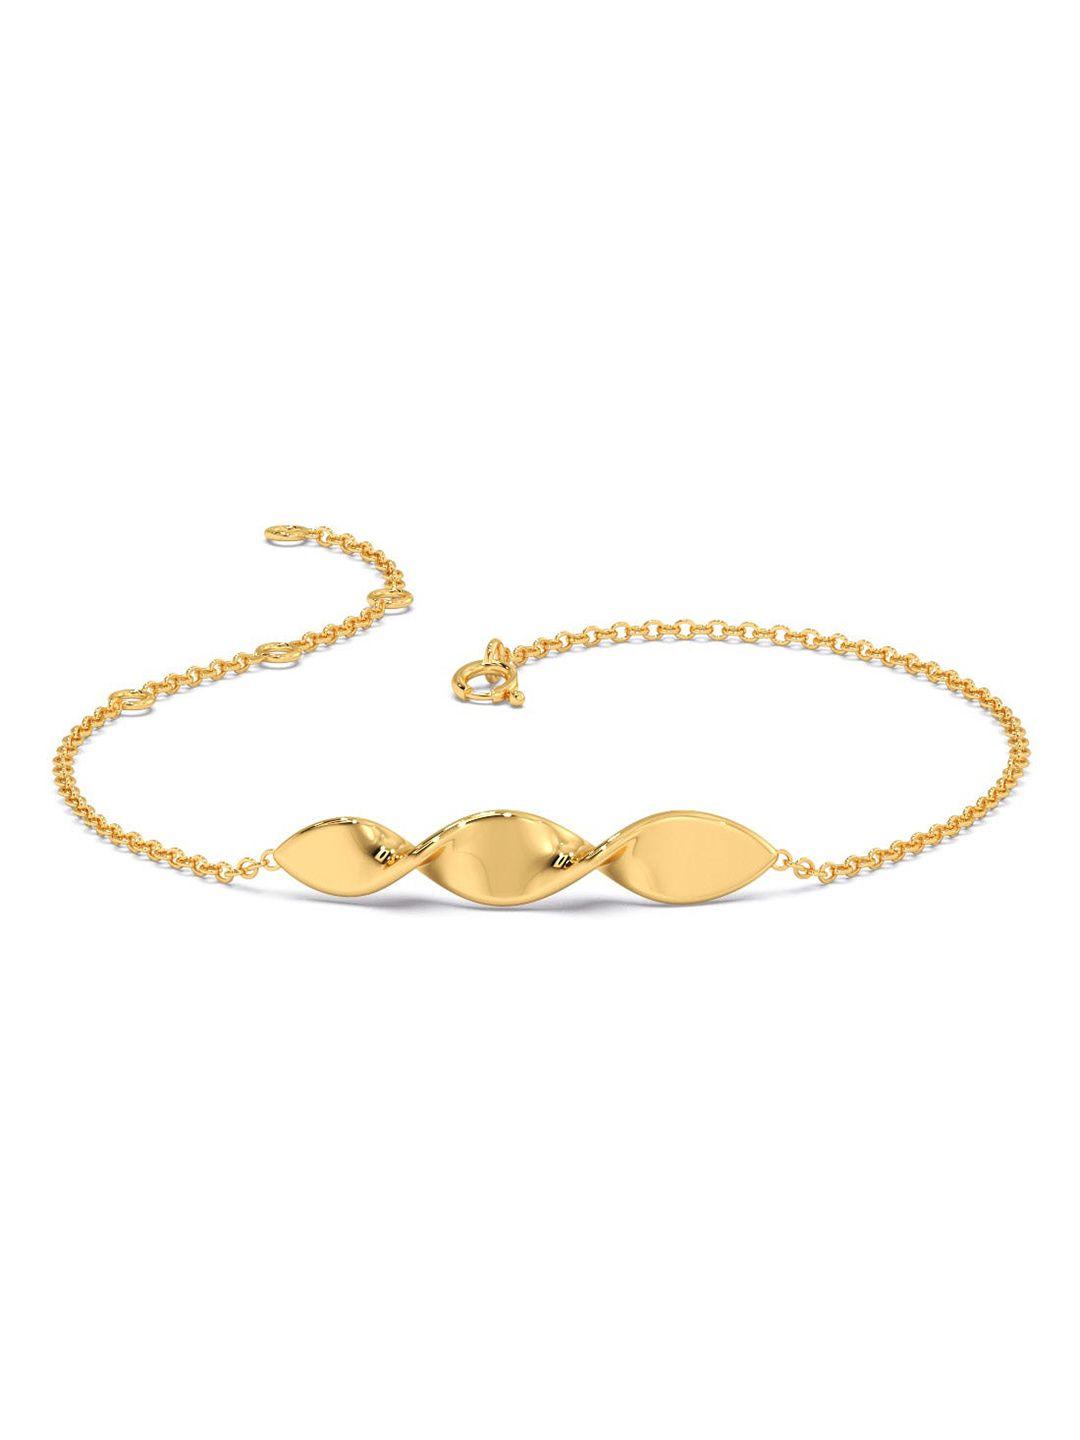 candere a kalyan jewellers company 14kt bis hallmark gold bracelet-1.26gm